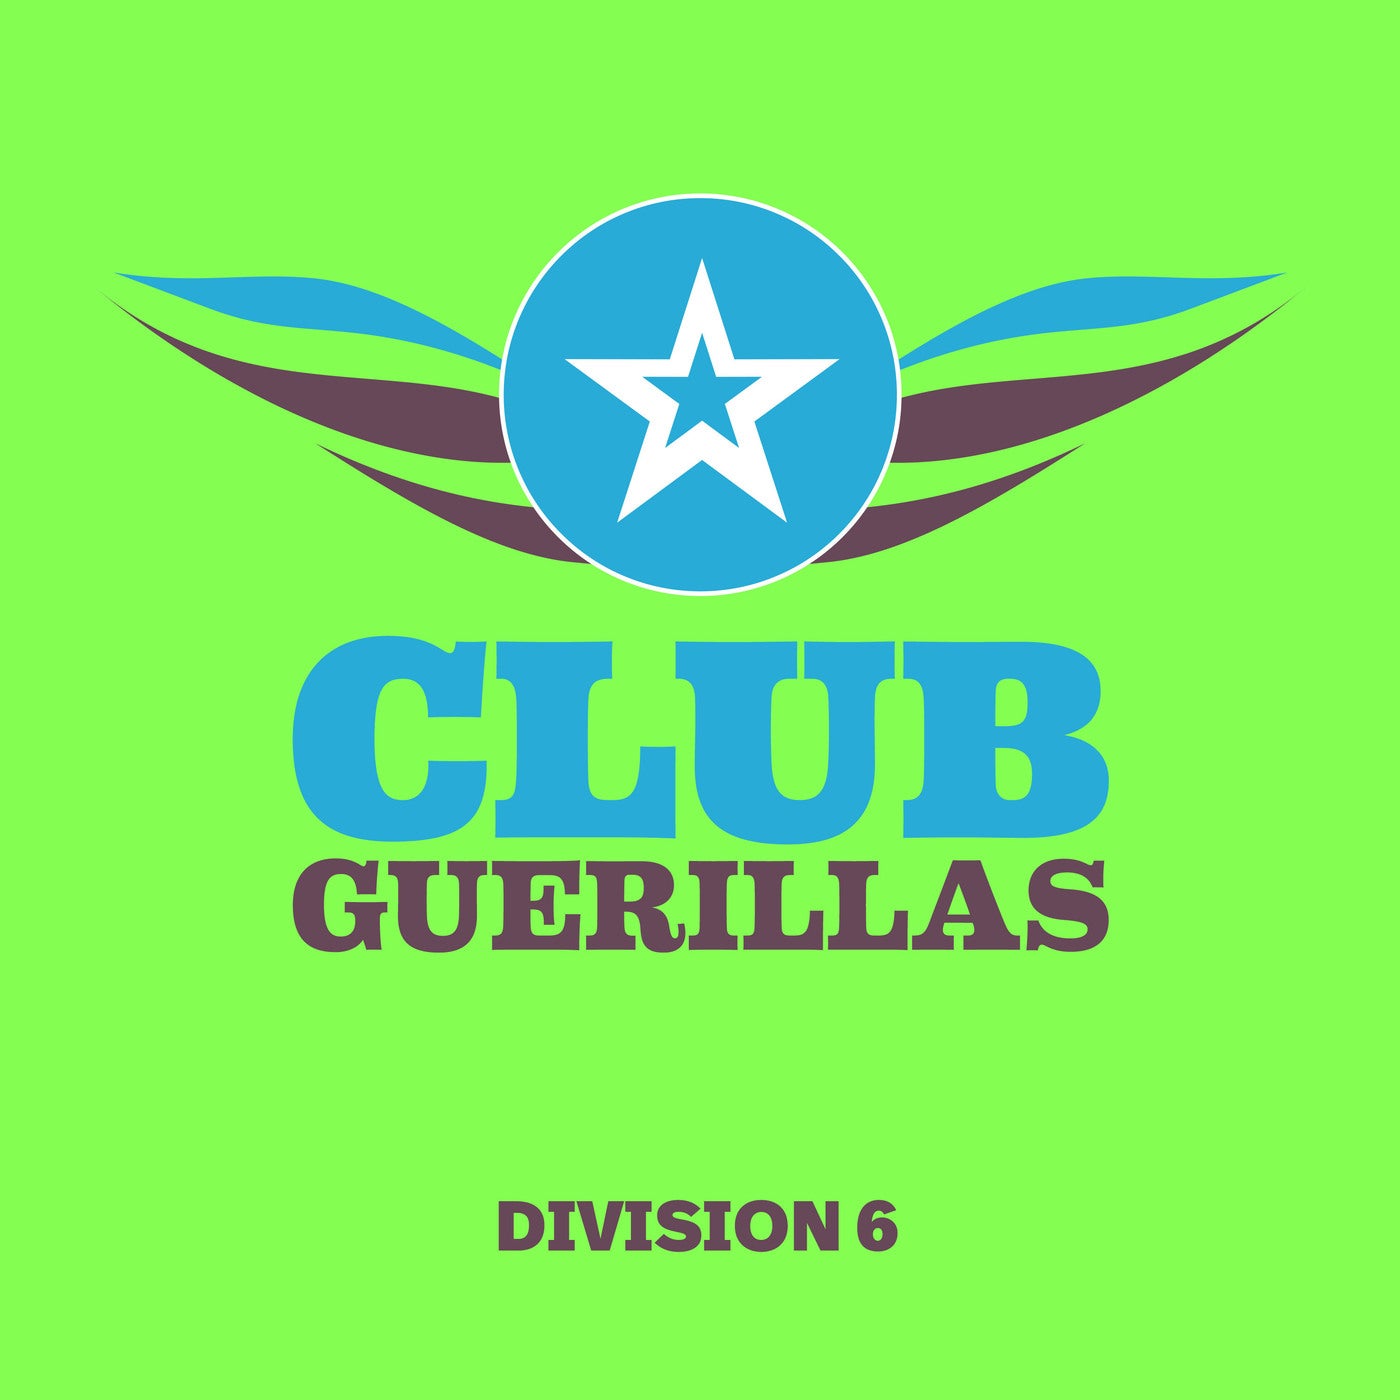 Club Guerillas, Division 6